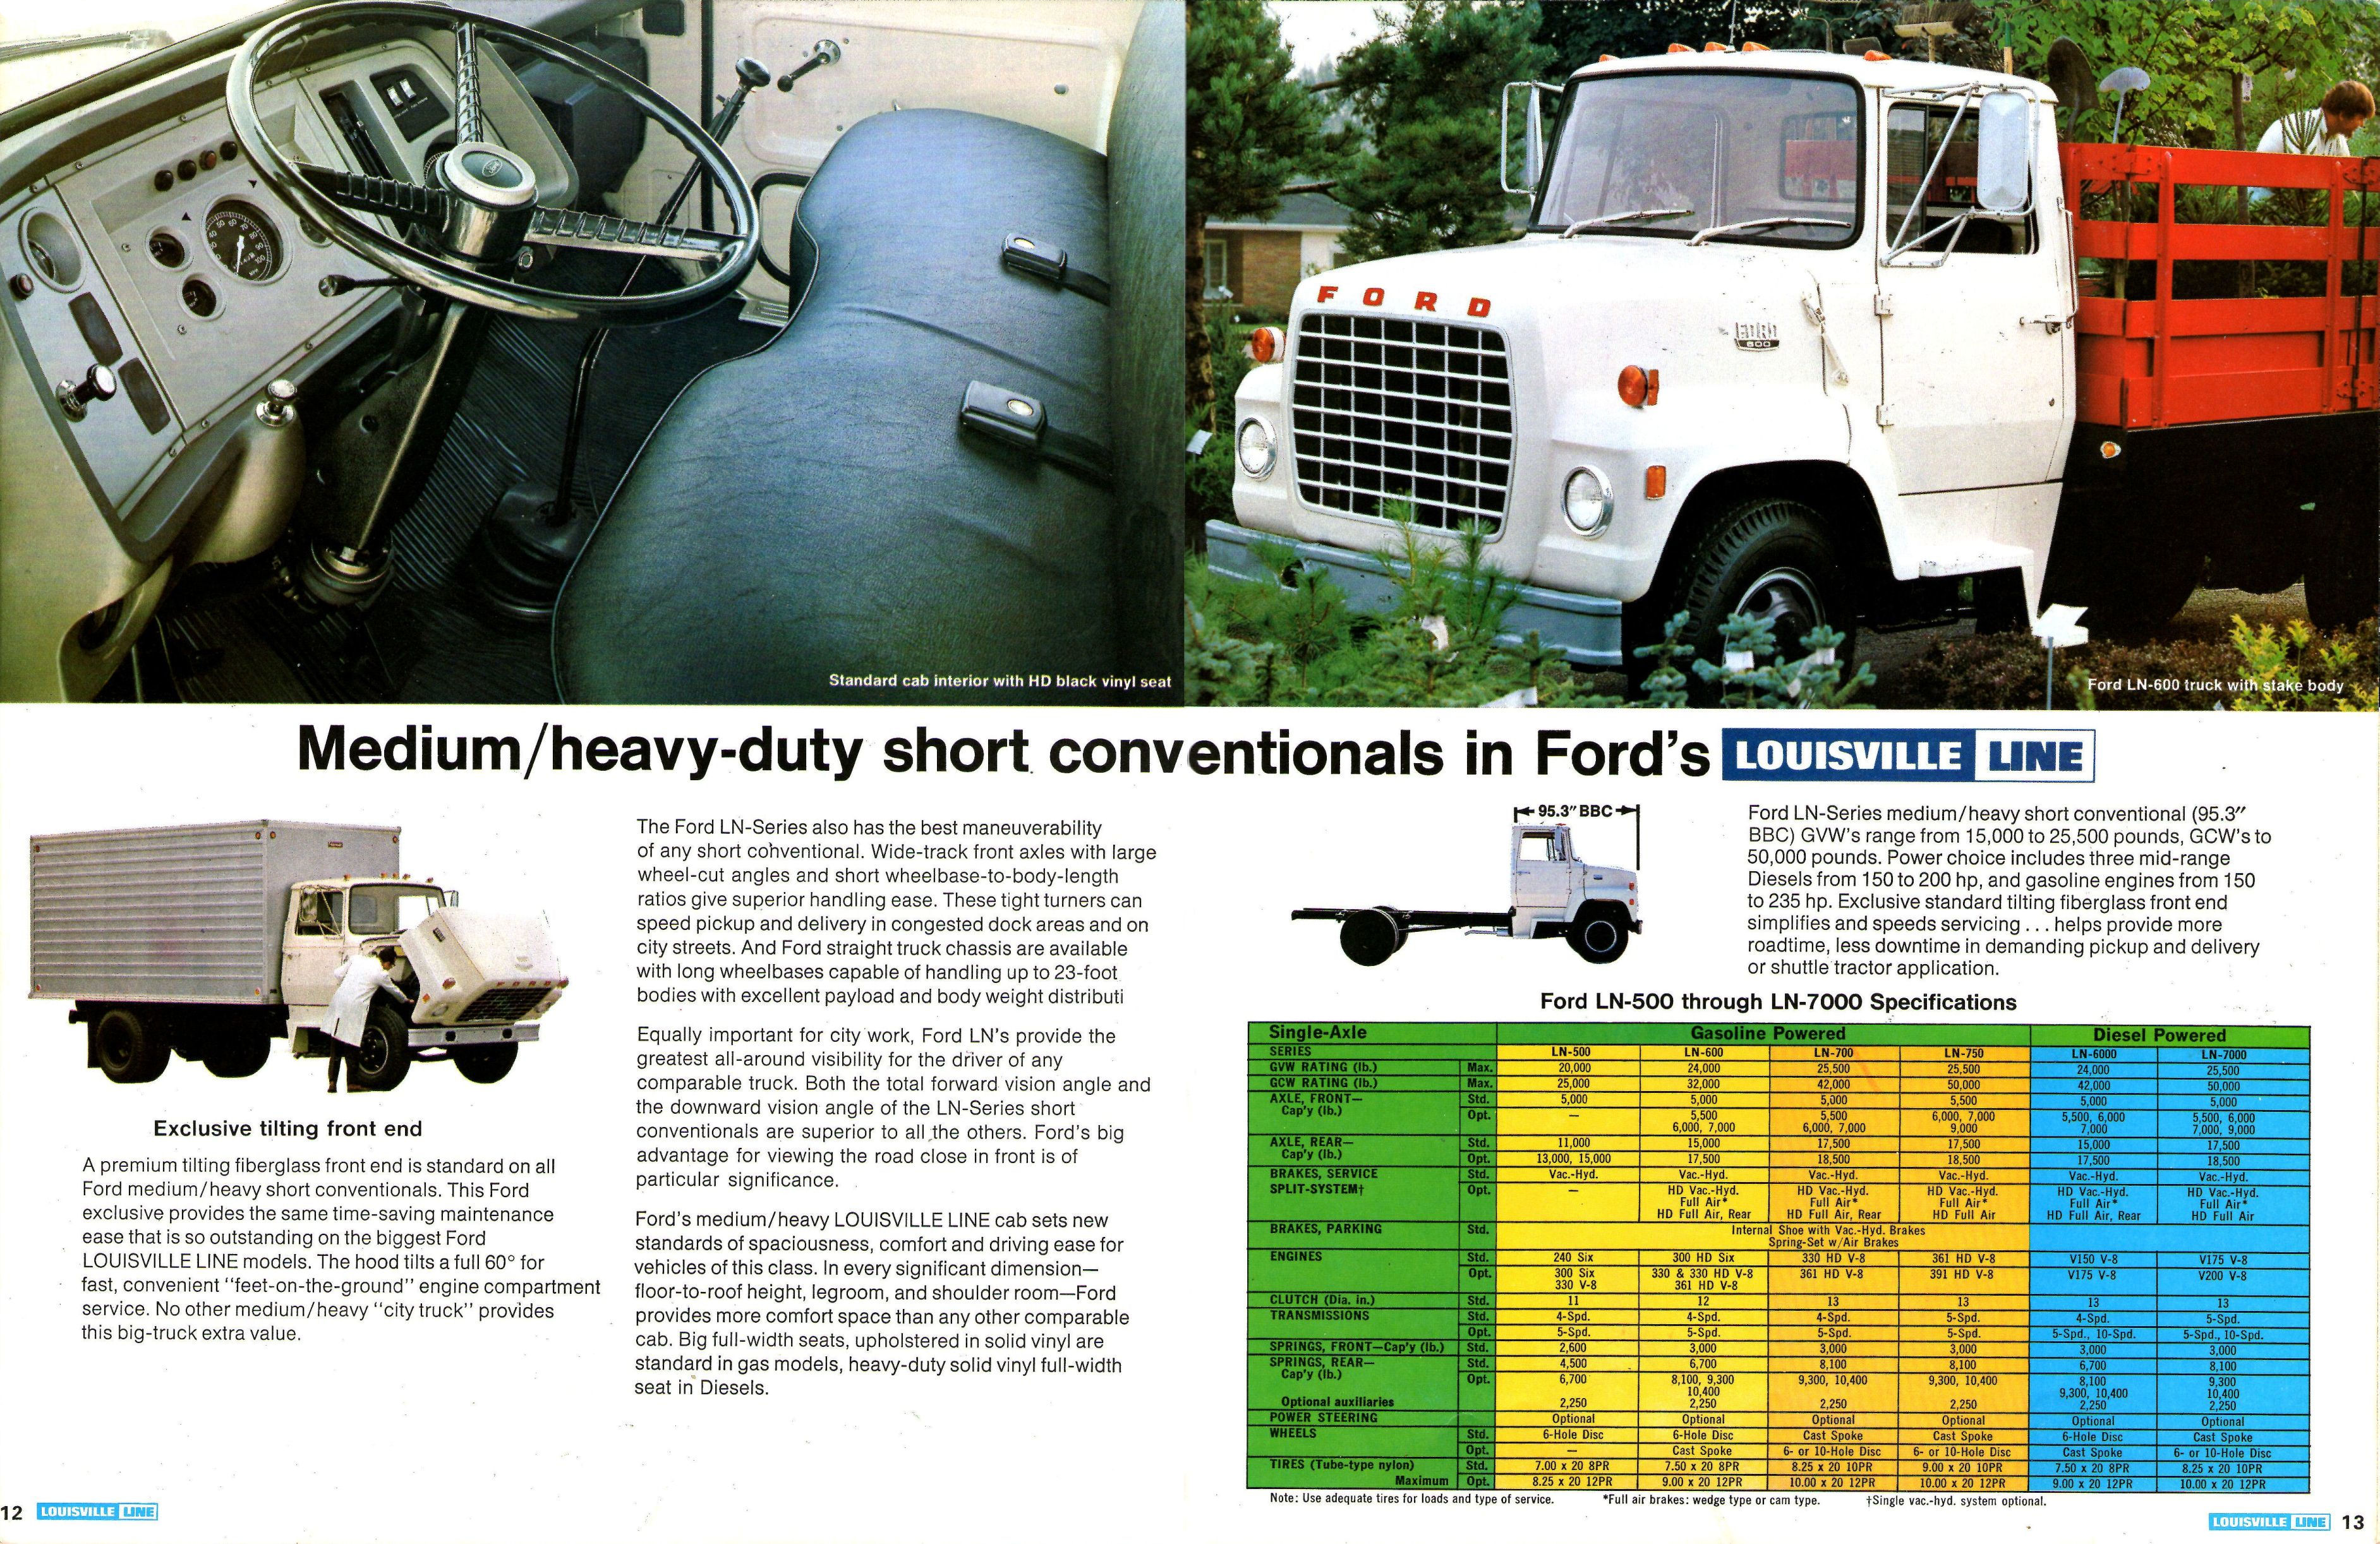 1969_Ford_Louisville_Line_Trucks-12-13